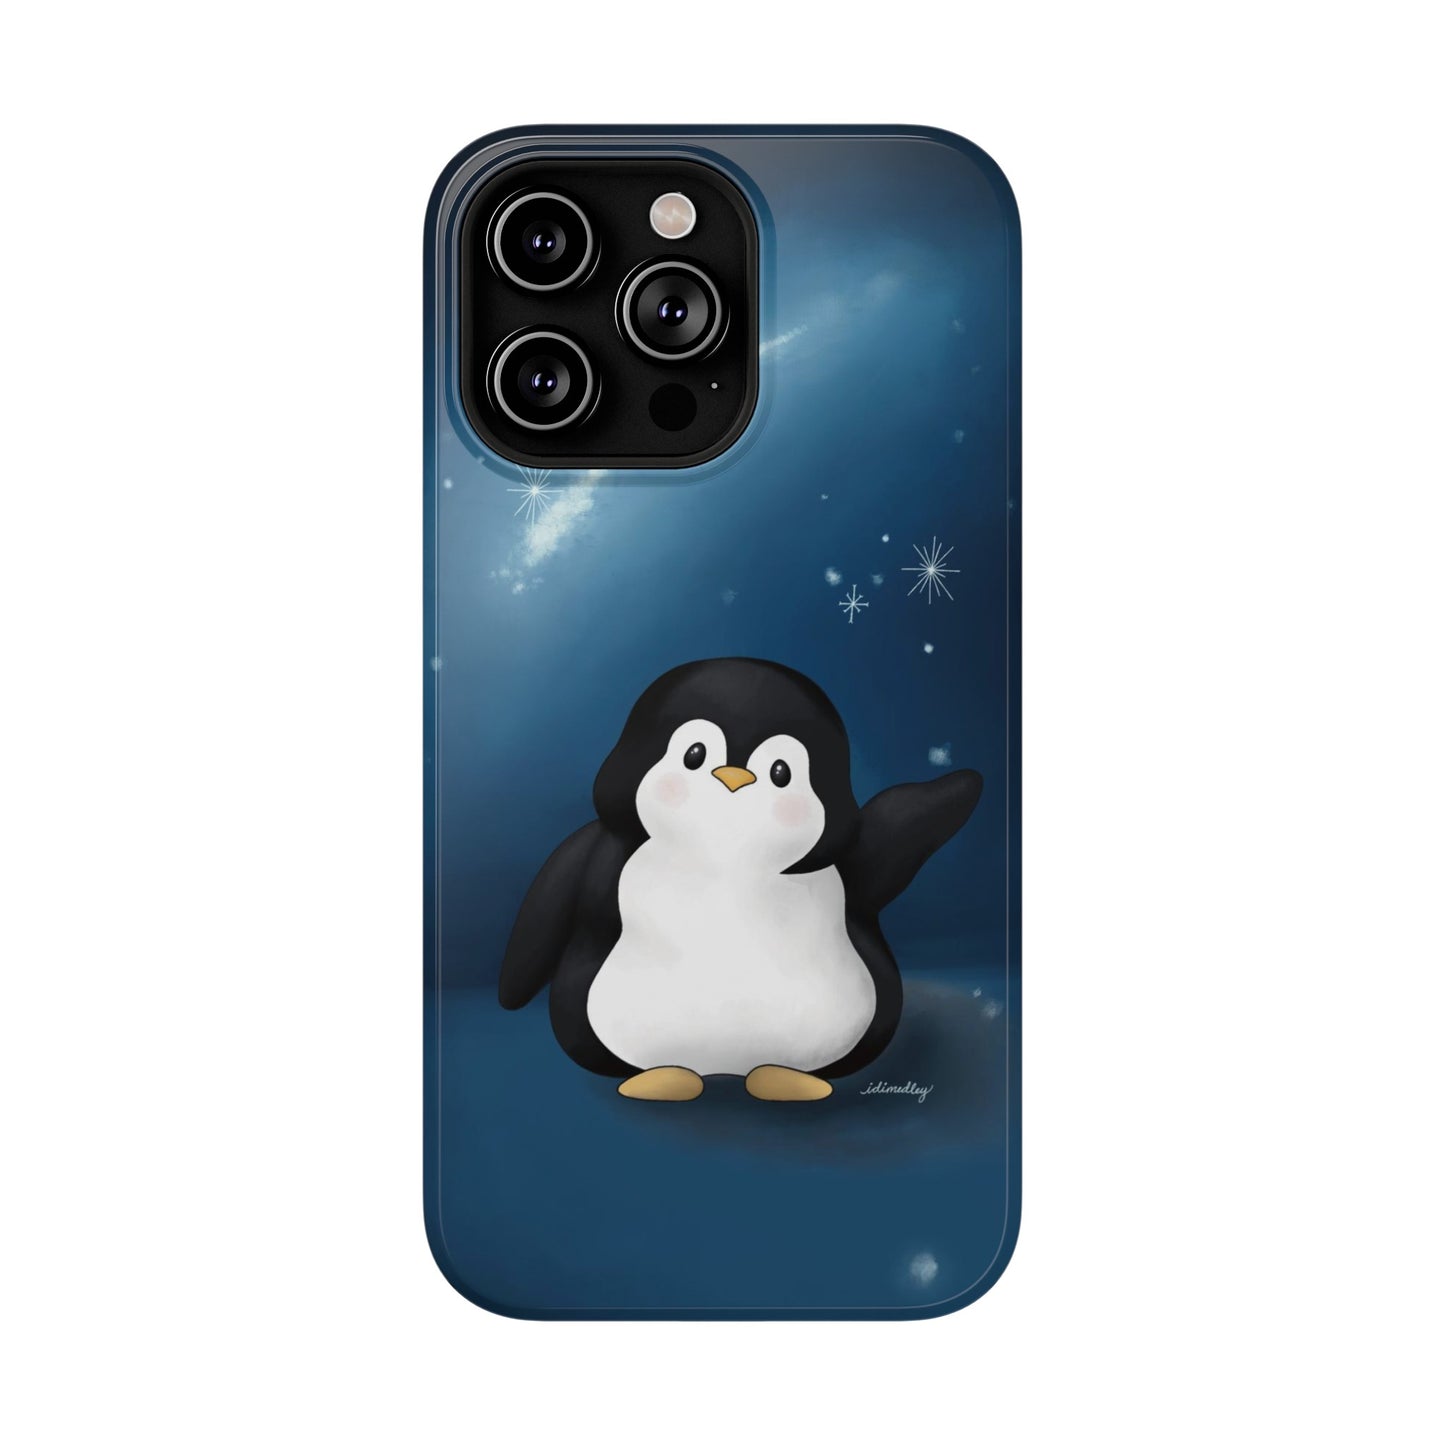 Penguin in Starry Blue Night Skies